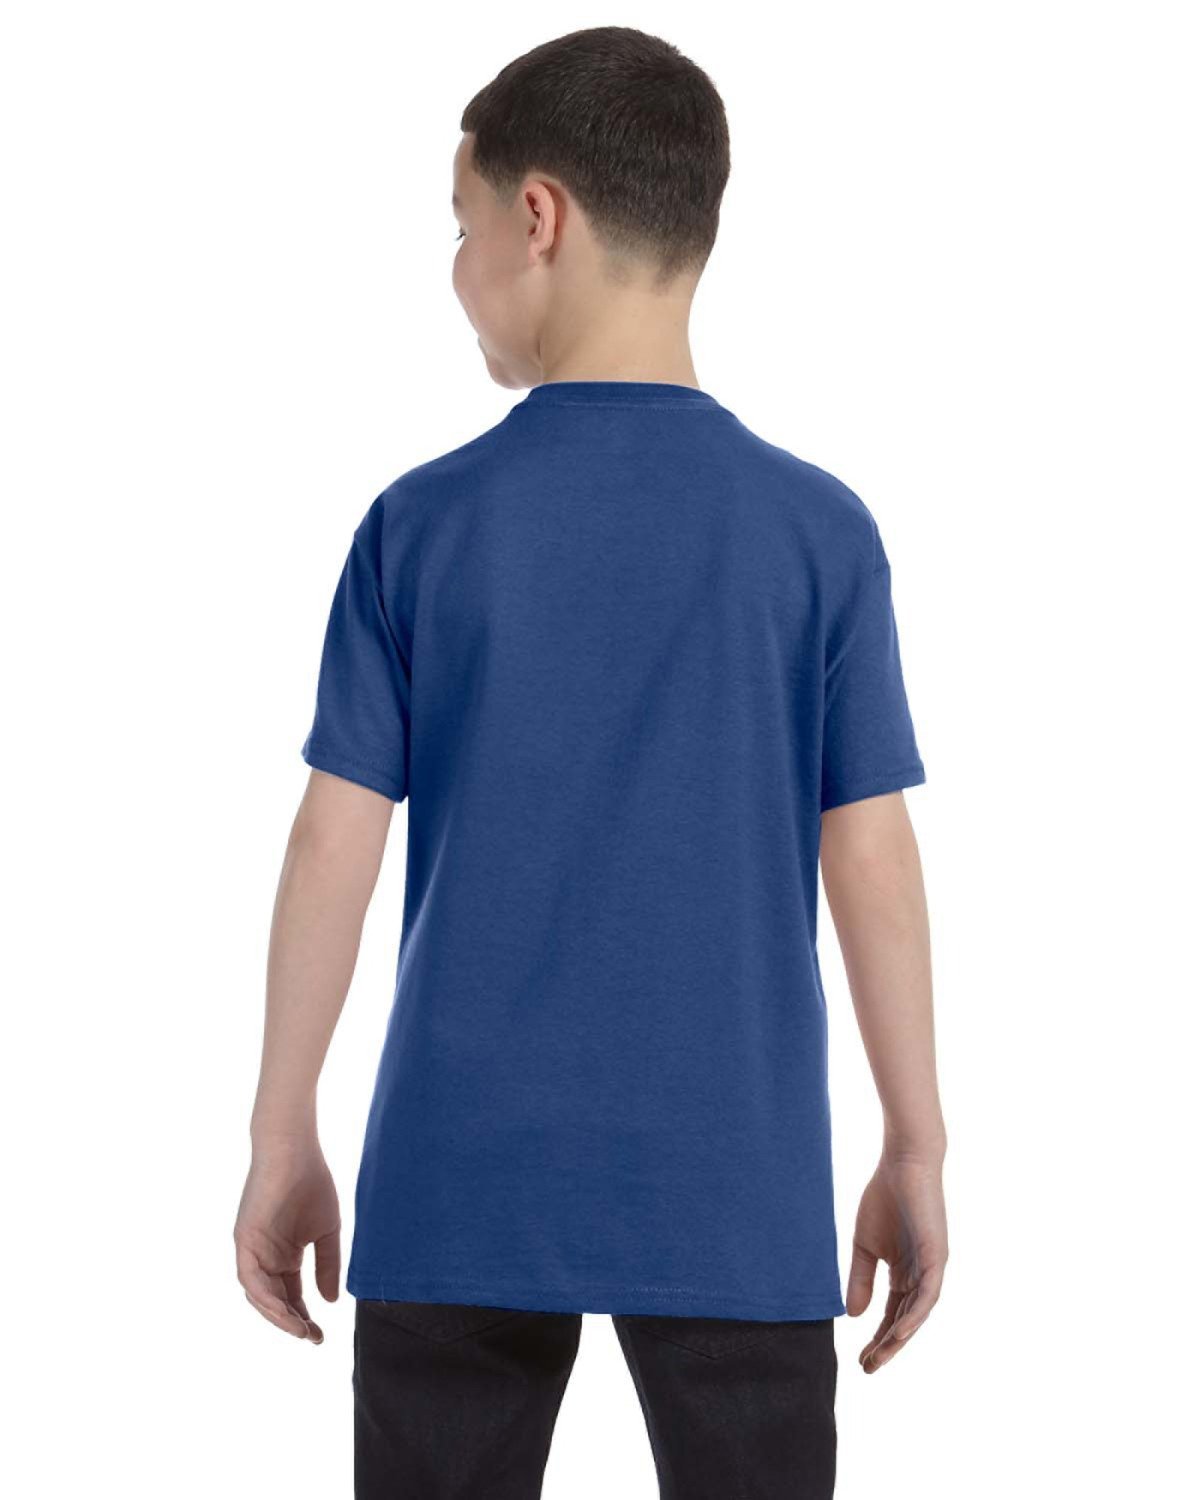 29B-Jerzees-VINTAGE HTH BLUE-Jerzees-T-Shirts-2